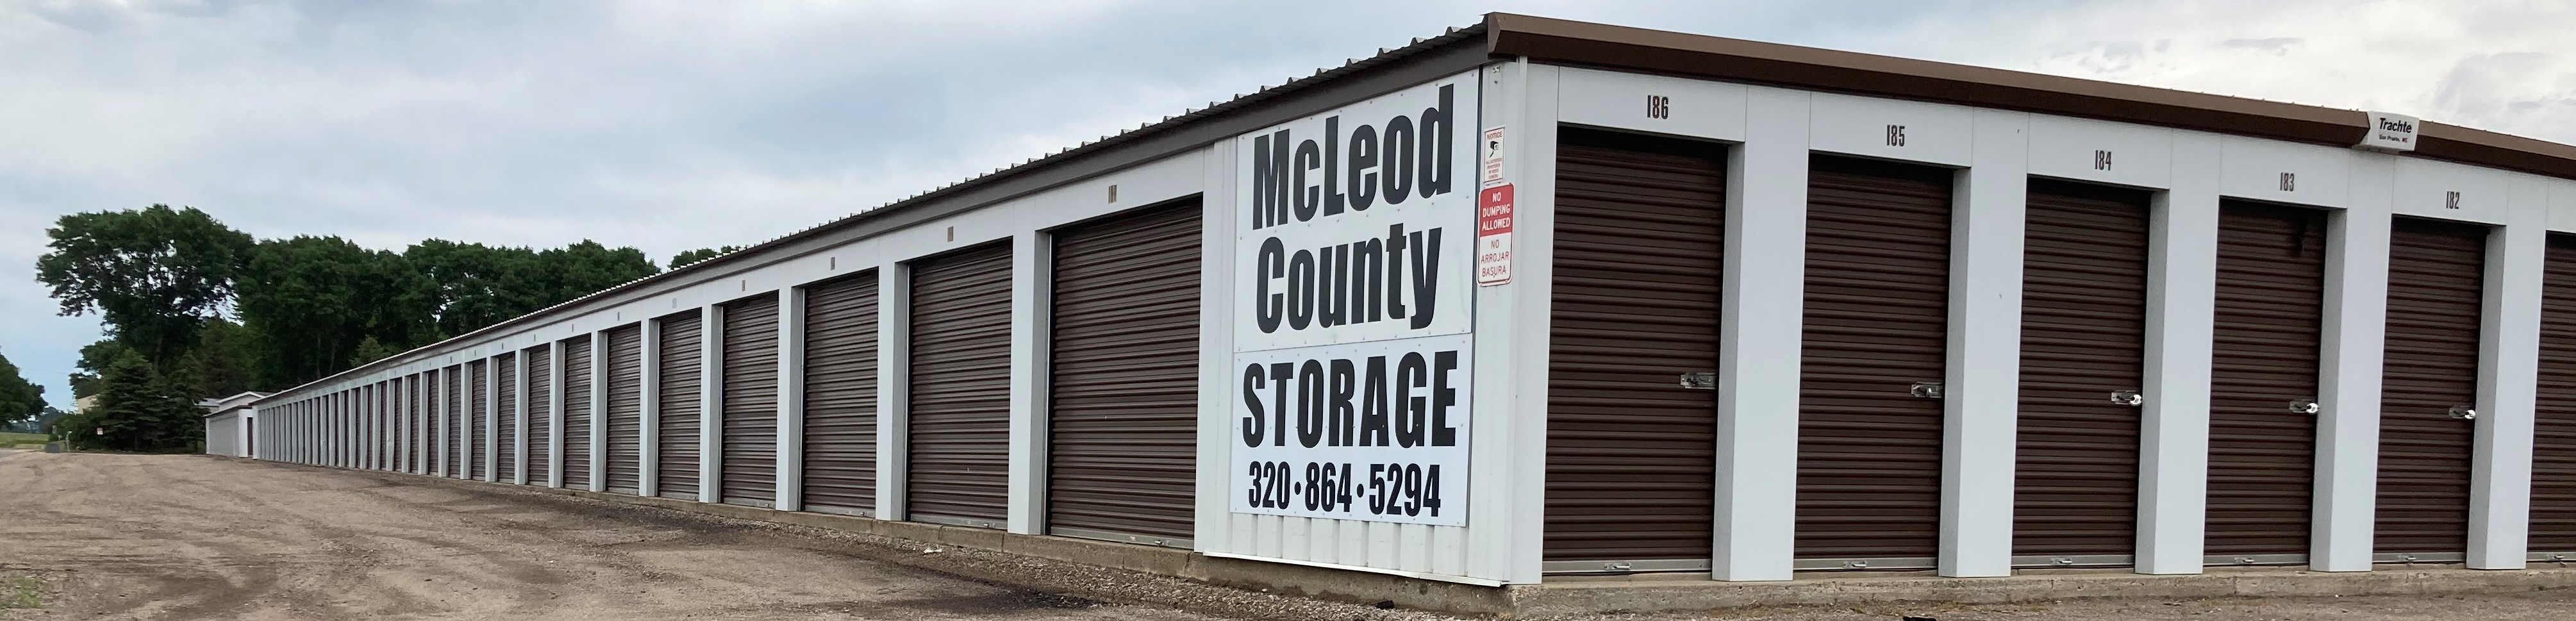 McLeod County Storage